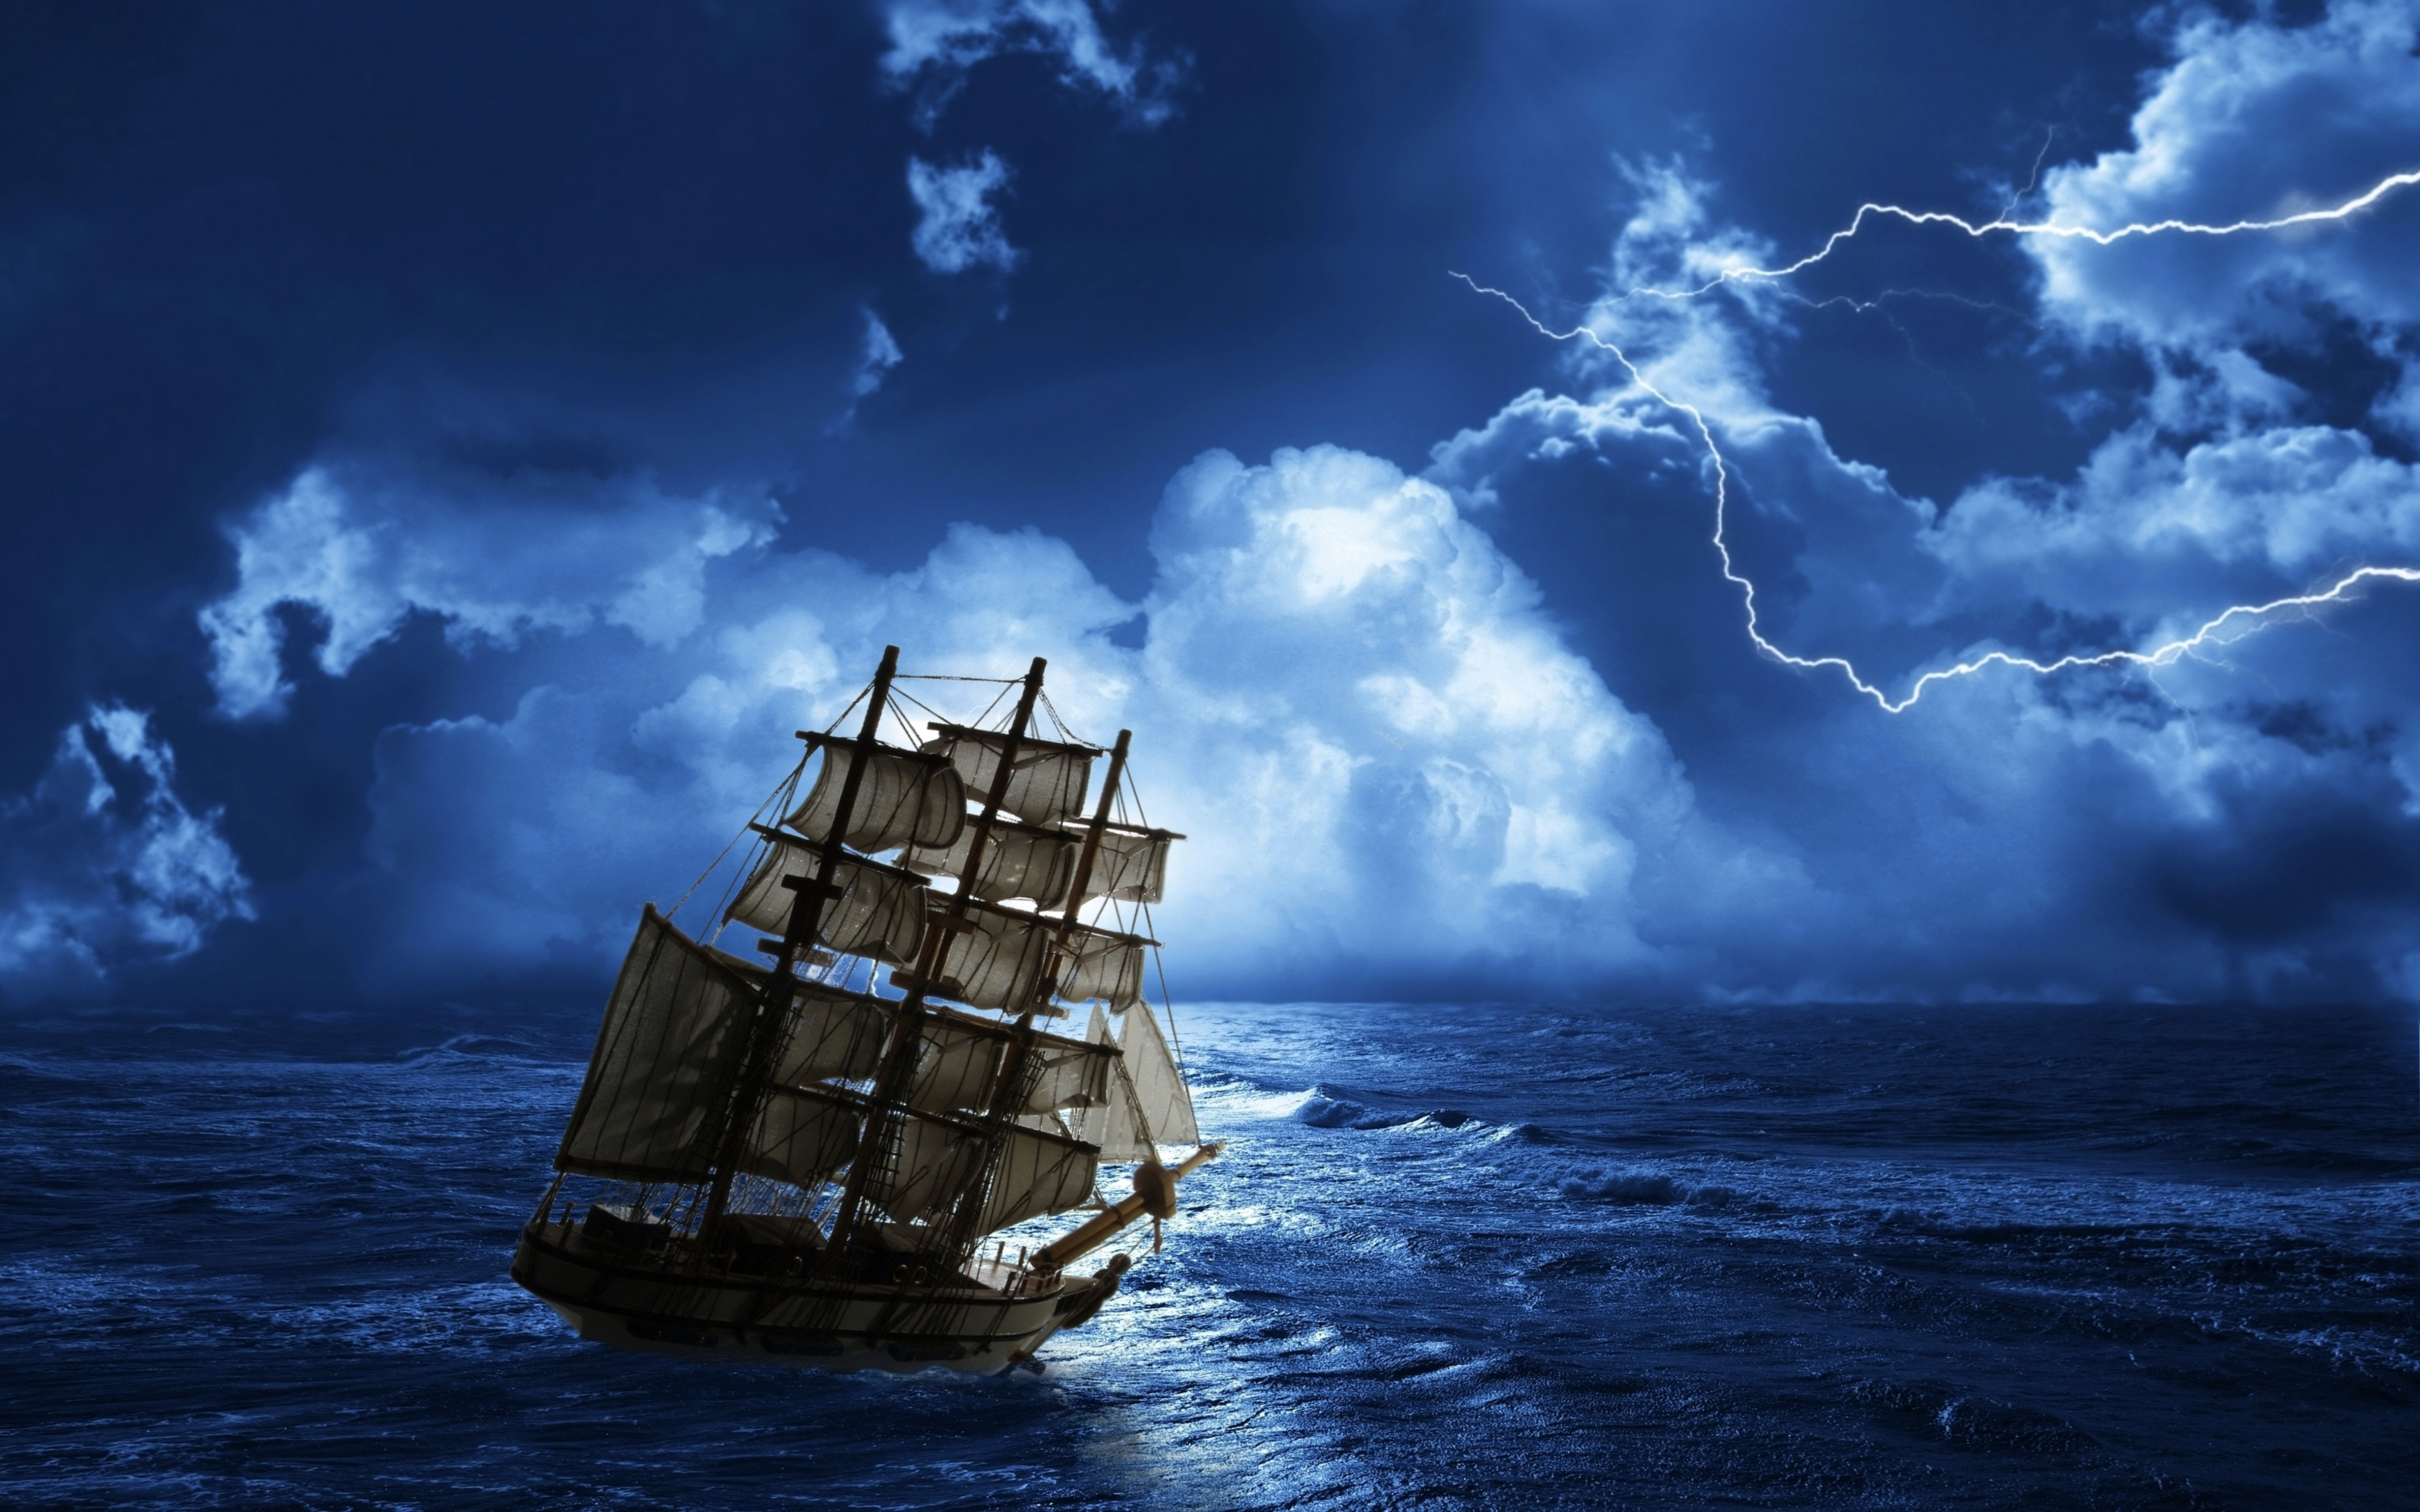 Ships Sailing Sea Sky Clouds Night Lightning Wallpapers And Photos